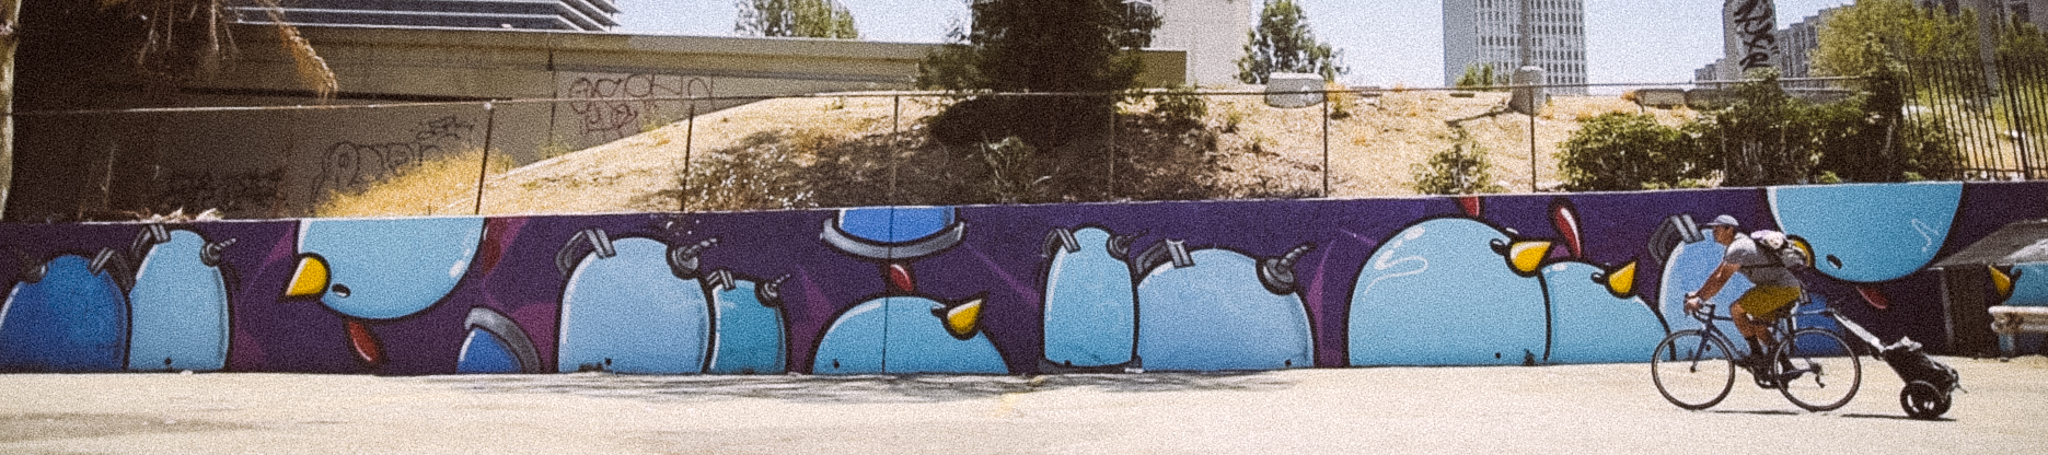 cachicken-la-wall-mural